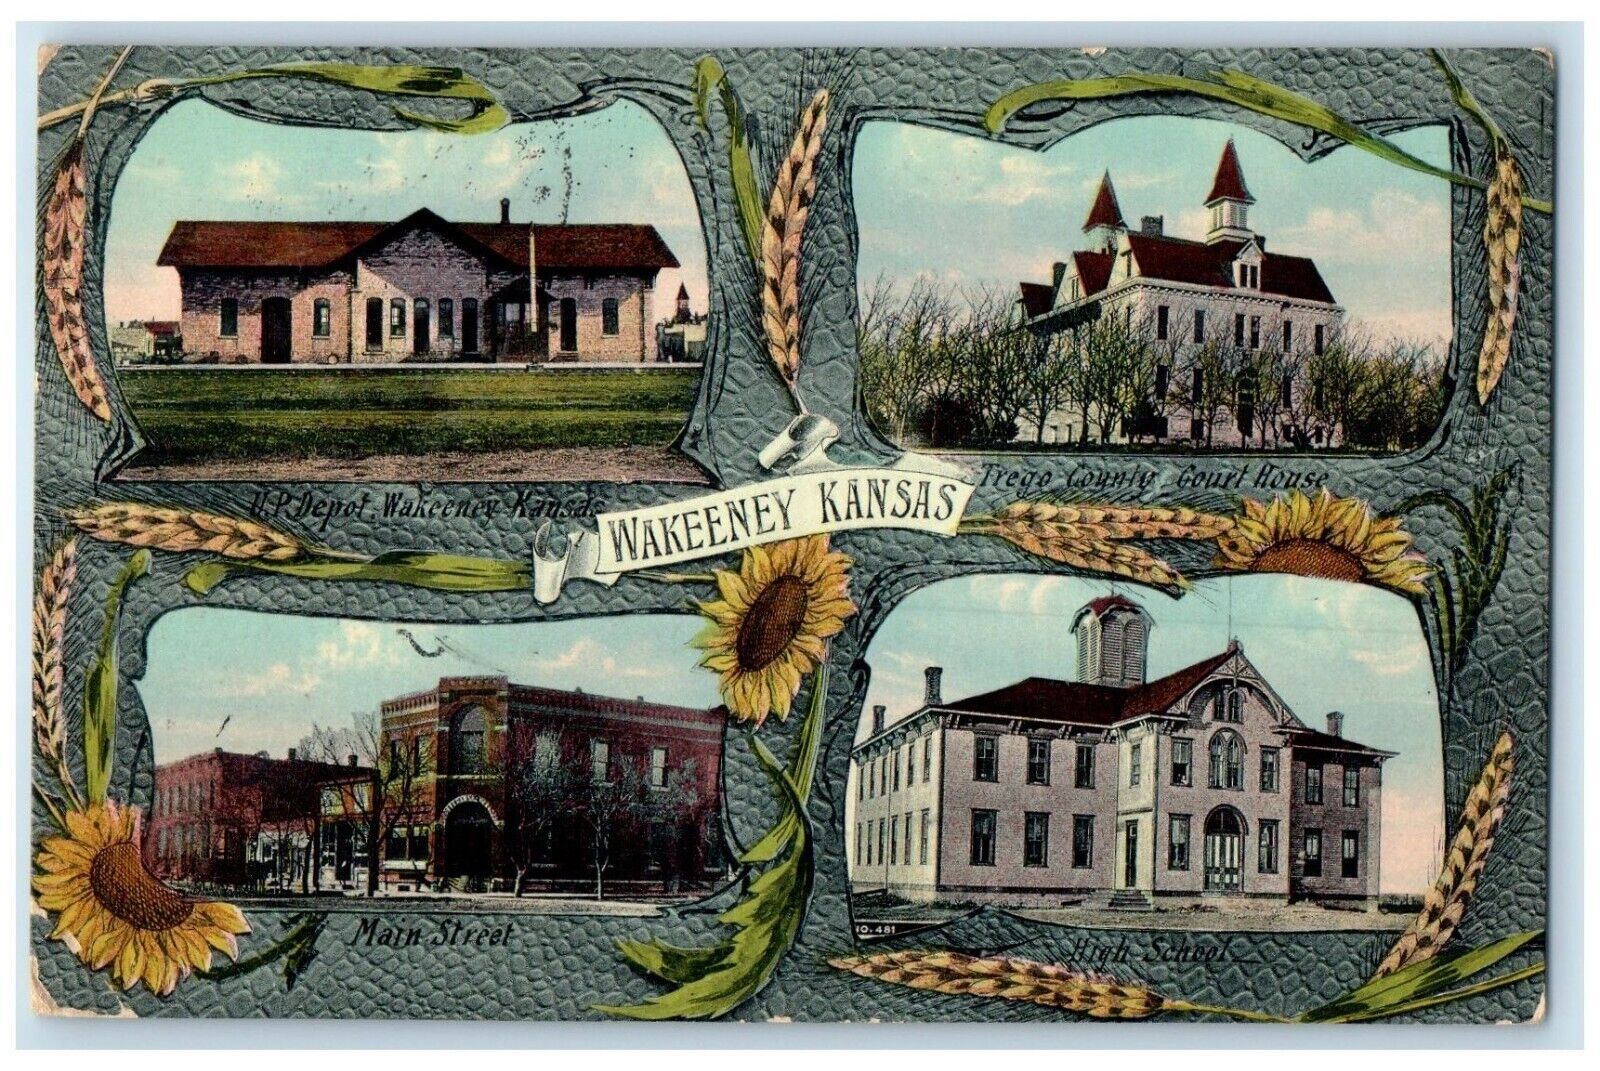 1909 Main Street Trego County Court House Wakeeney Kansas KS Multiview Postcard